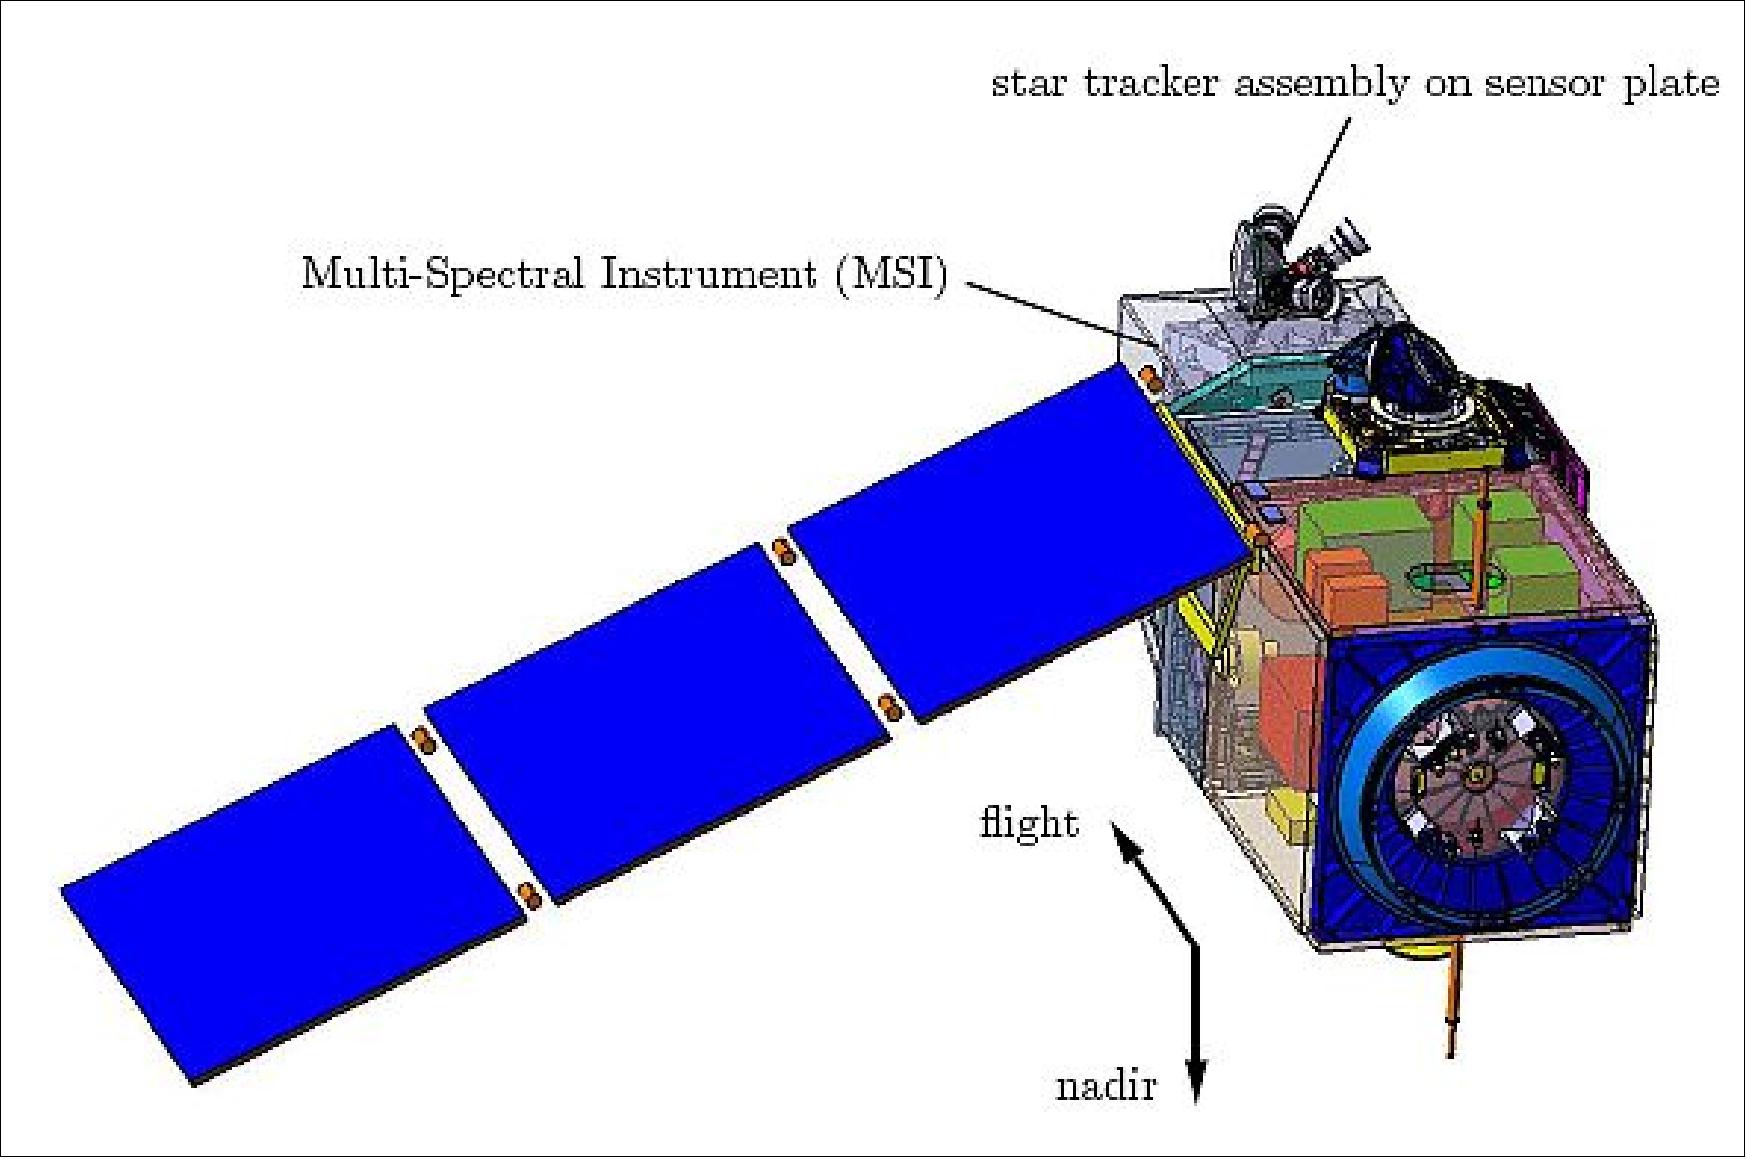 Schematic view of the deployed Sentinel-2 spacecraft